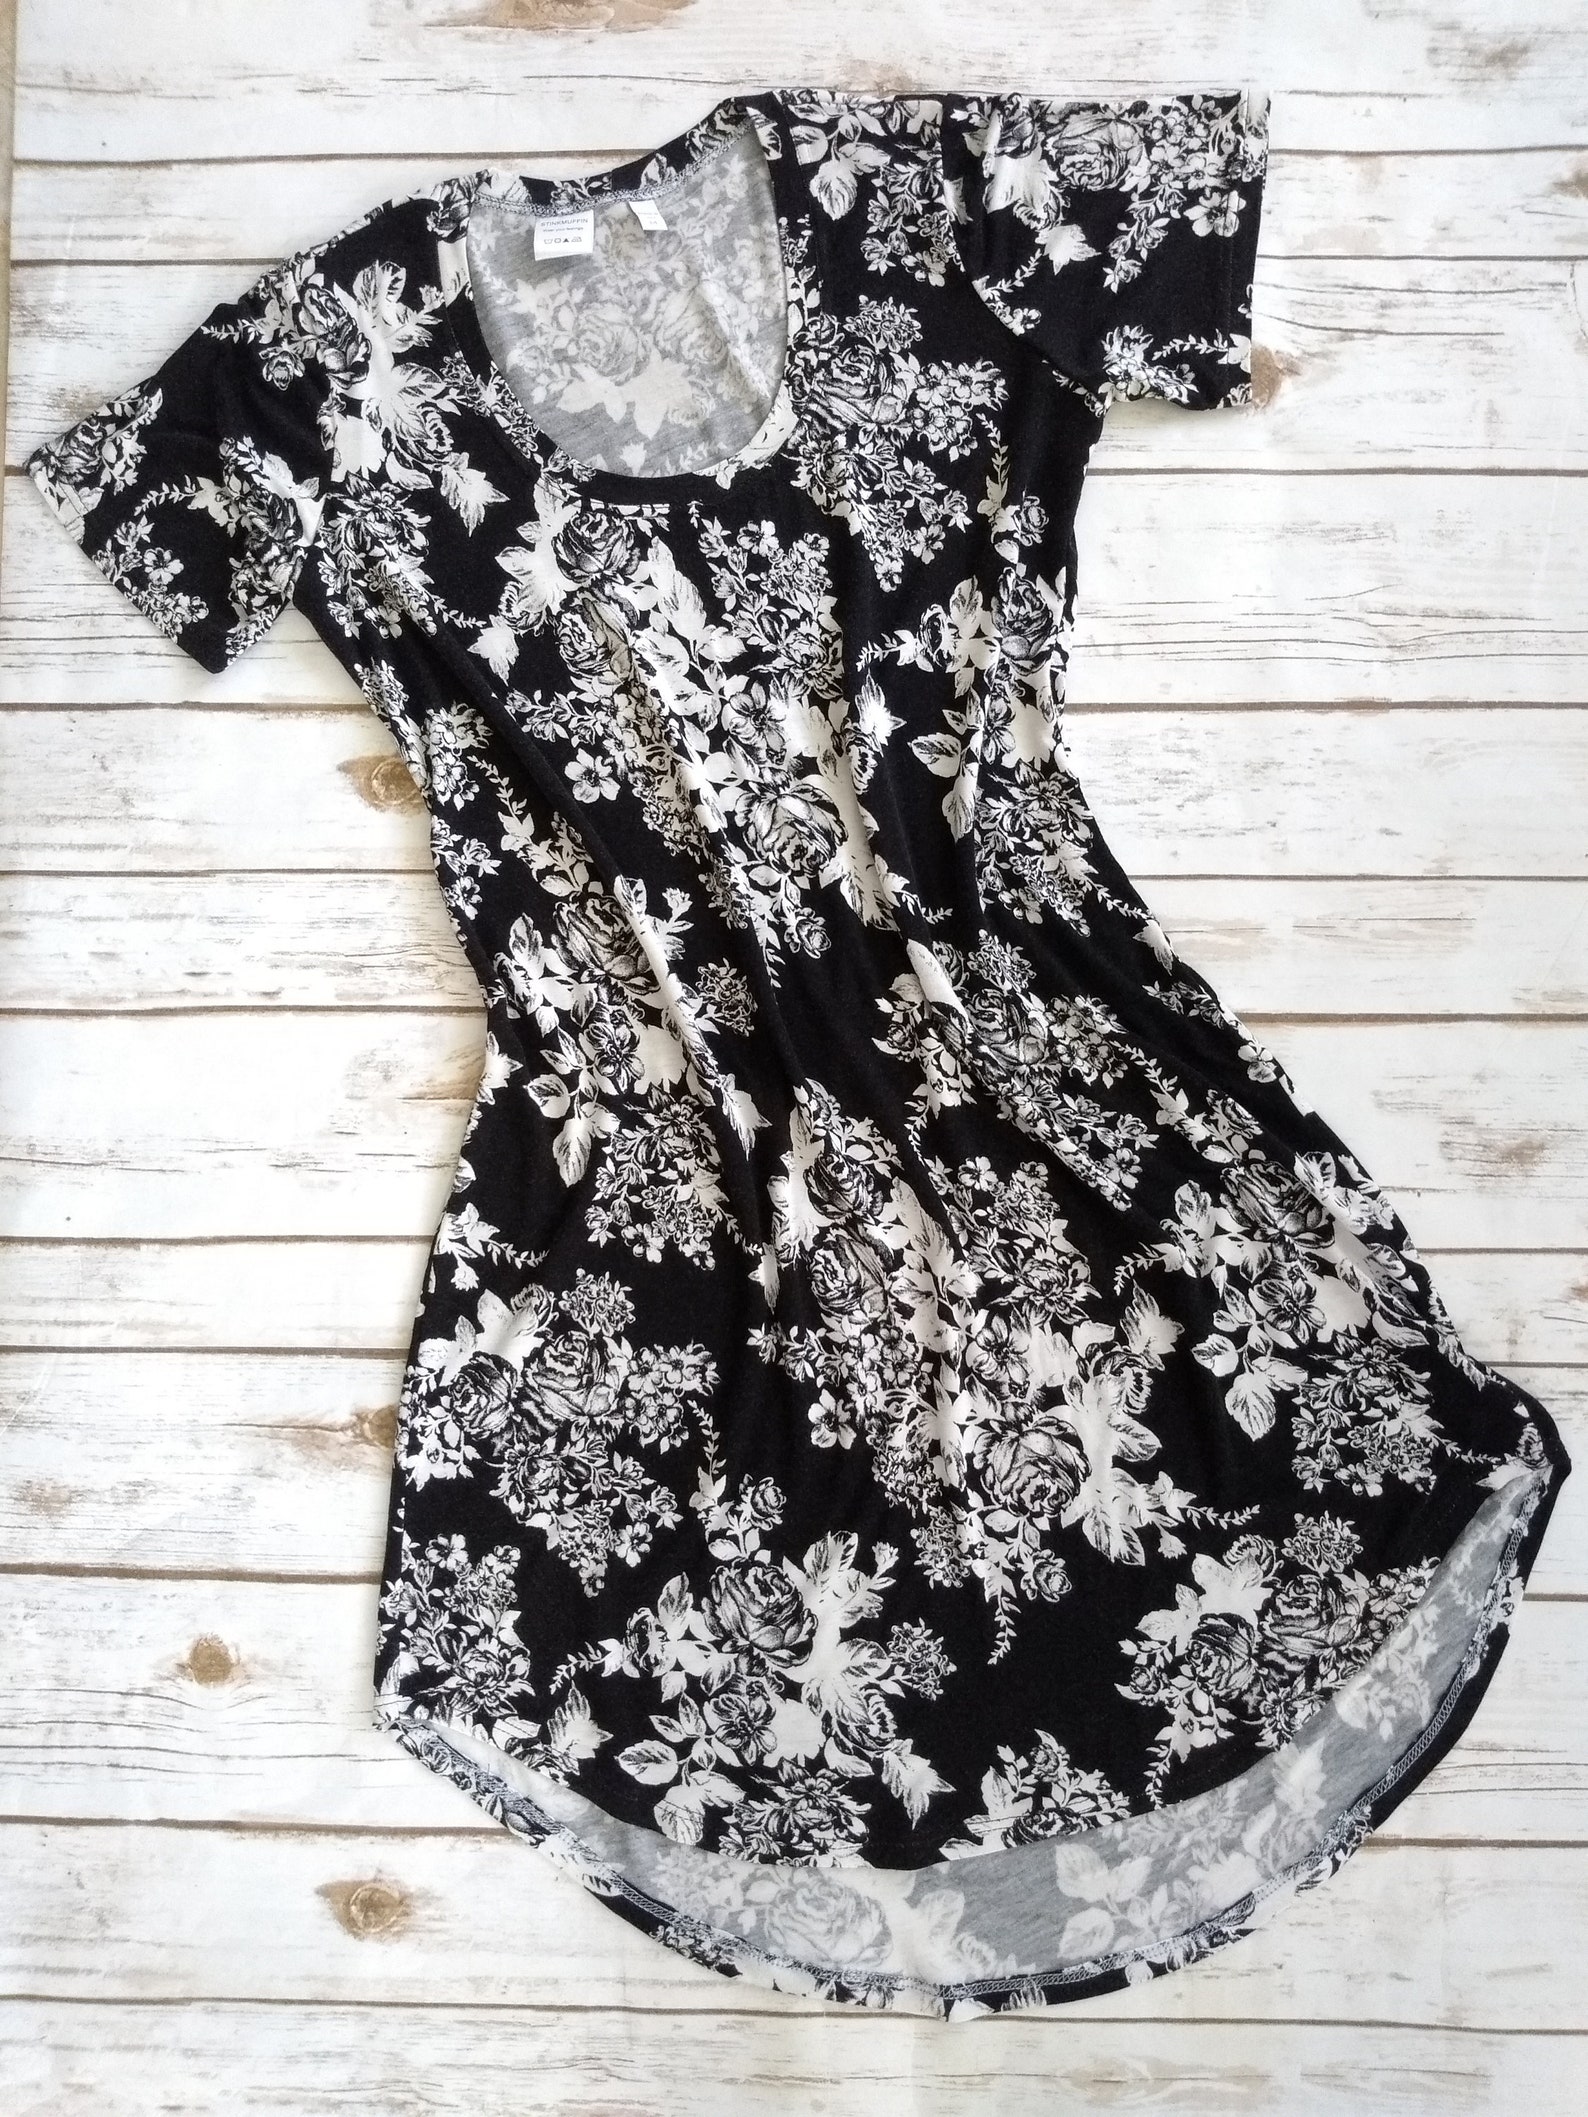 Summer T-shirt Dress Black & White Floral Floral T-Shirt | Etsy